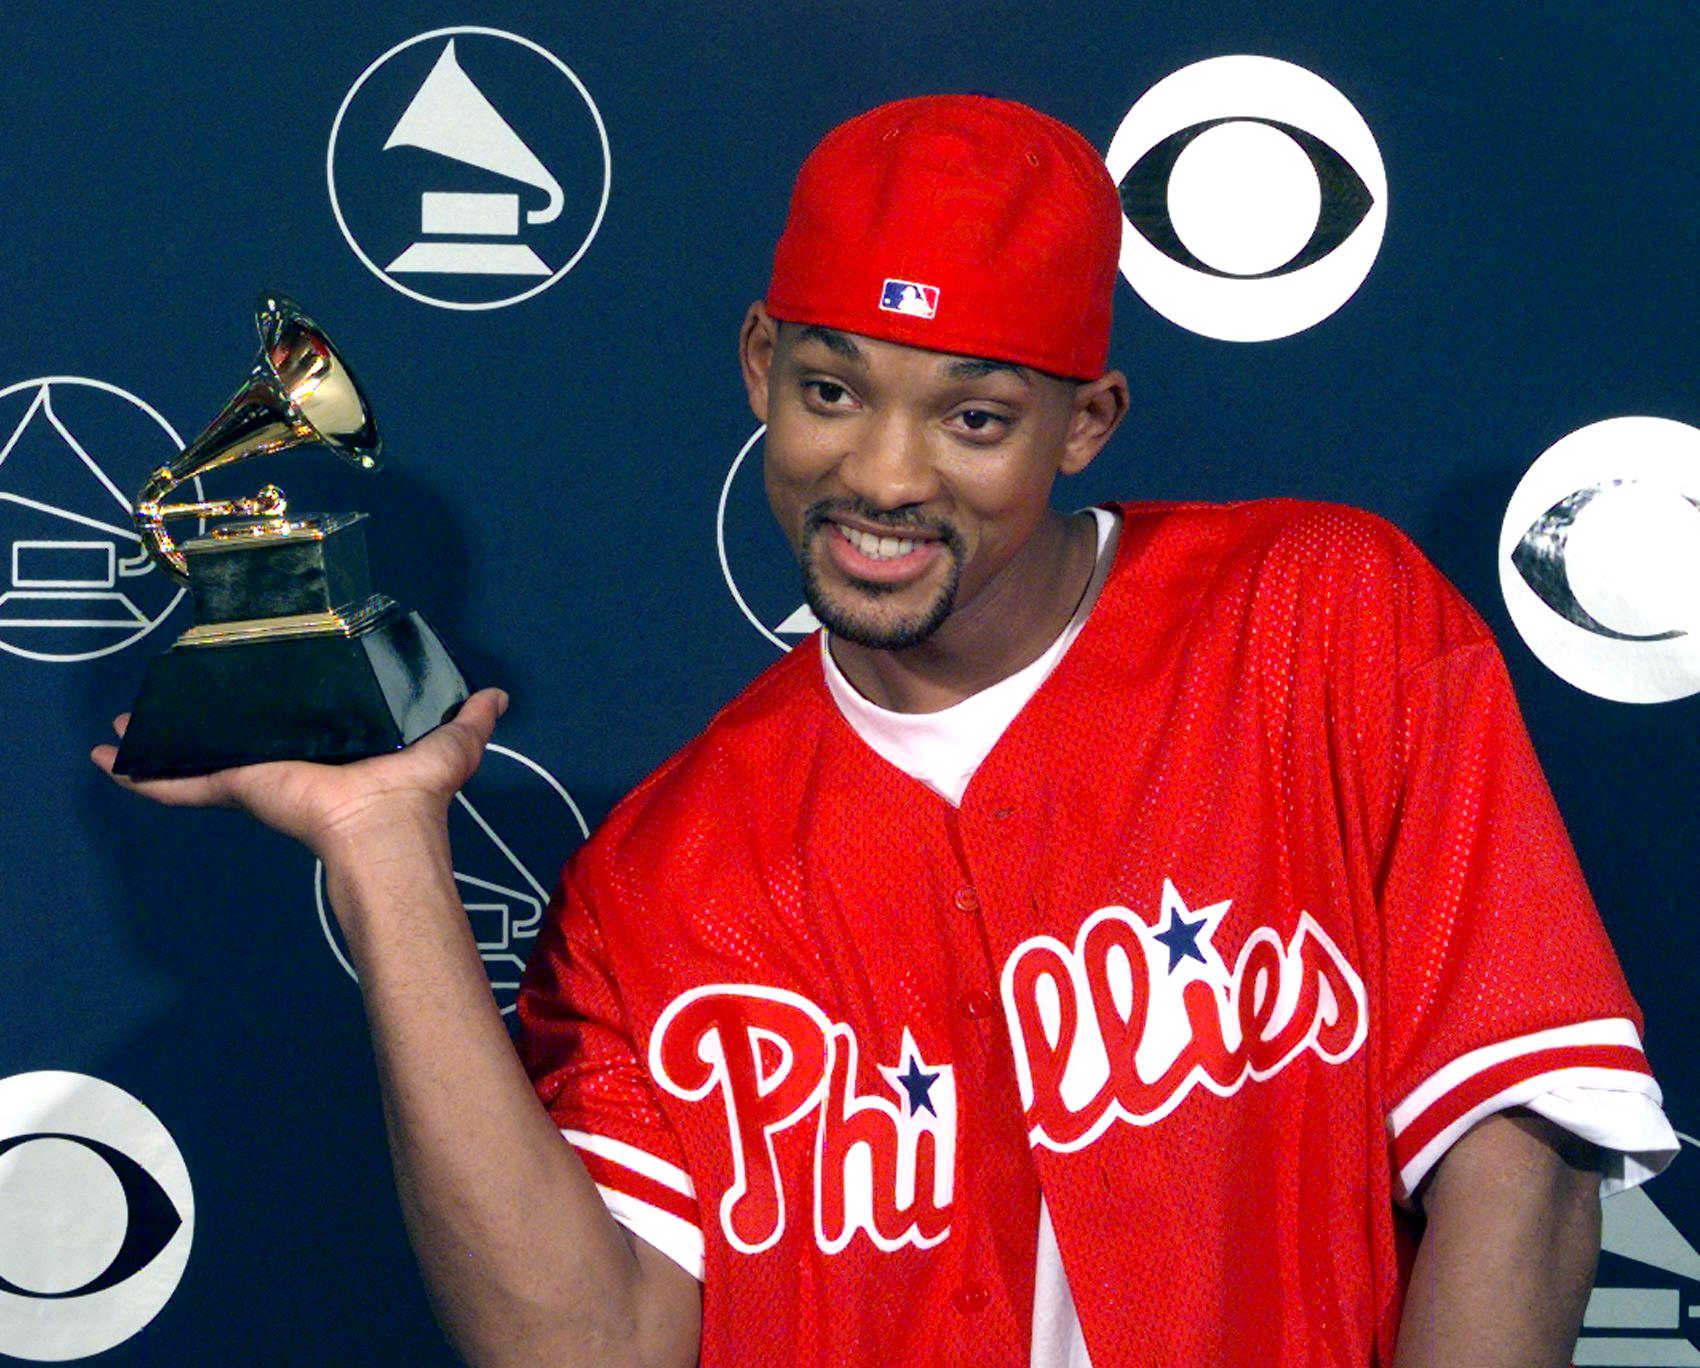 "Gettin' Jiggy wit It" rapper Will Smith wearing a red baseball cap